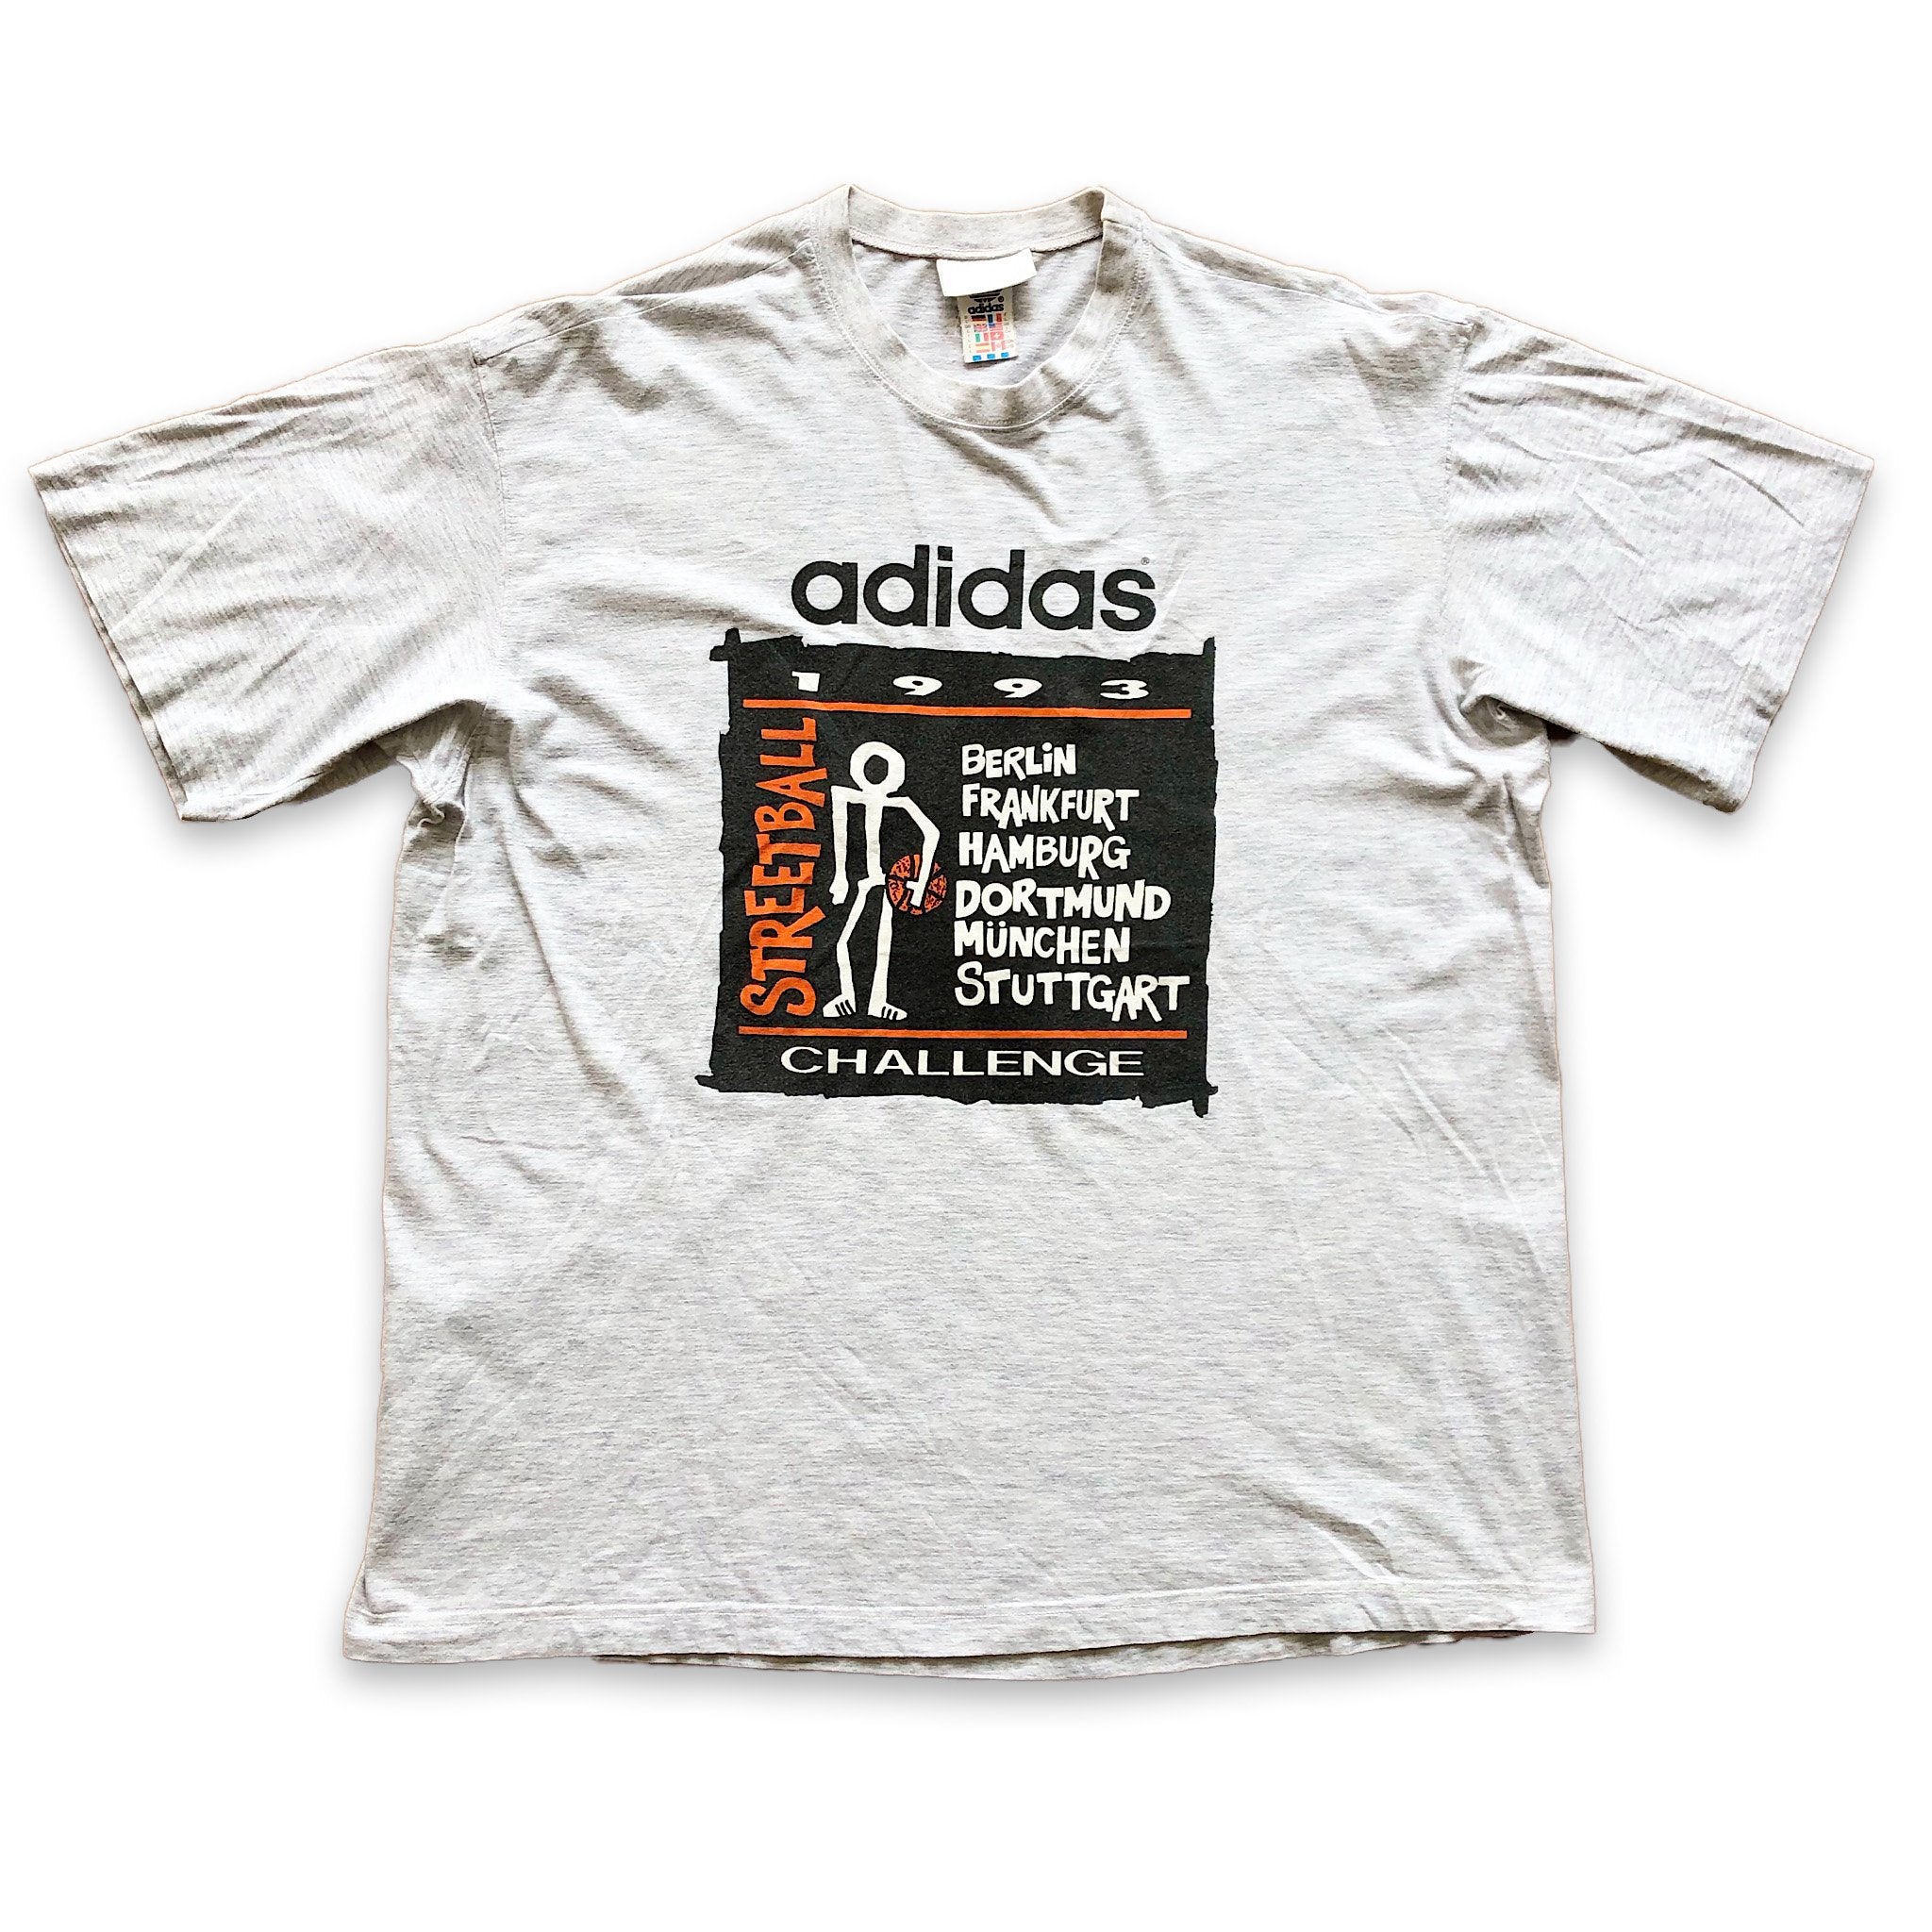 delicadeza Responder Transparentemente Vintage 1993 Adidas Streetball Challenge Tshirt Large